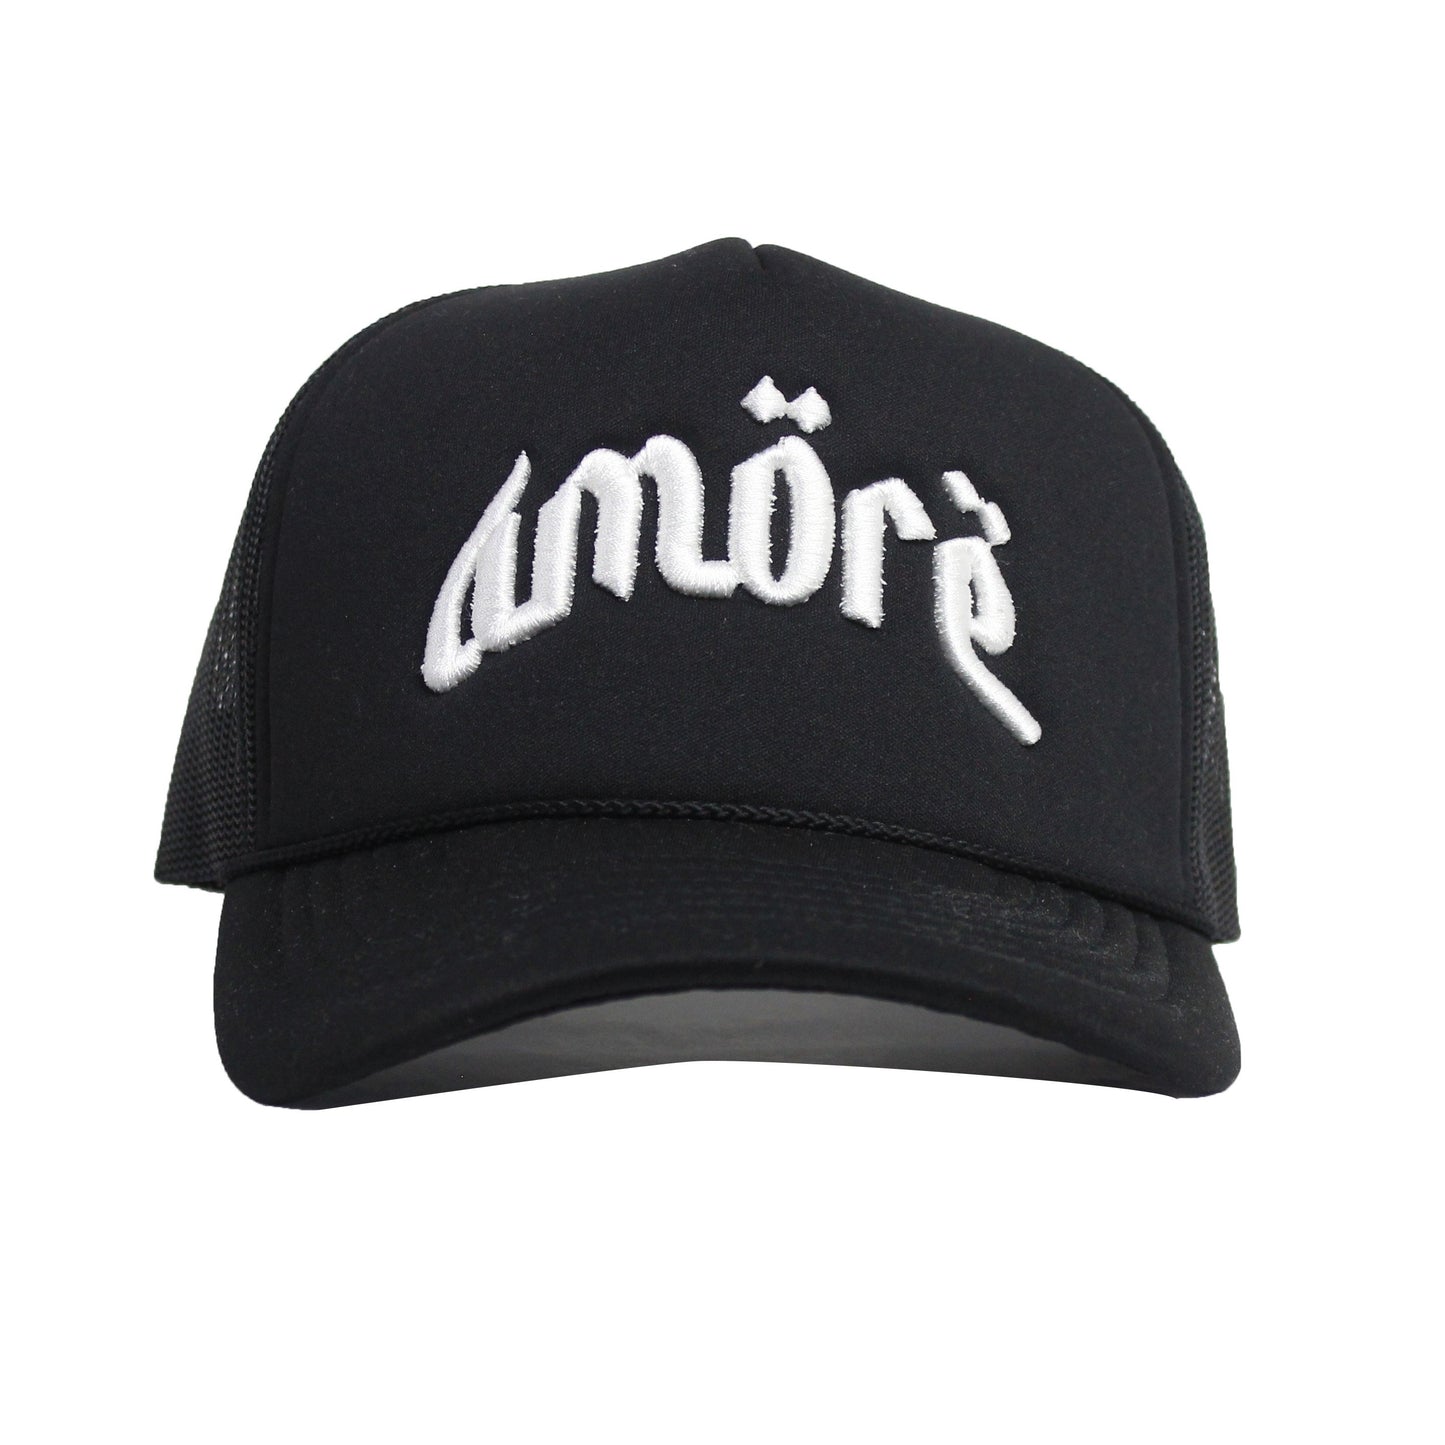 AMORE TRUCKER CAP (Black)